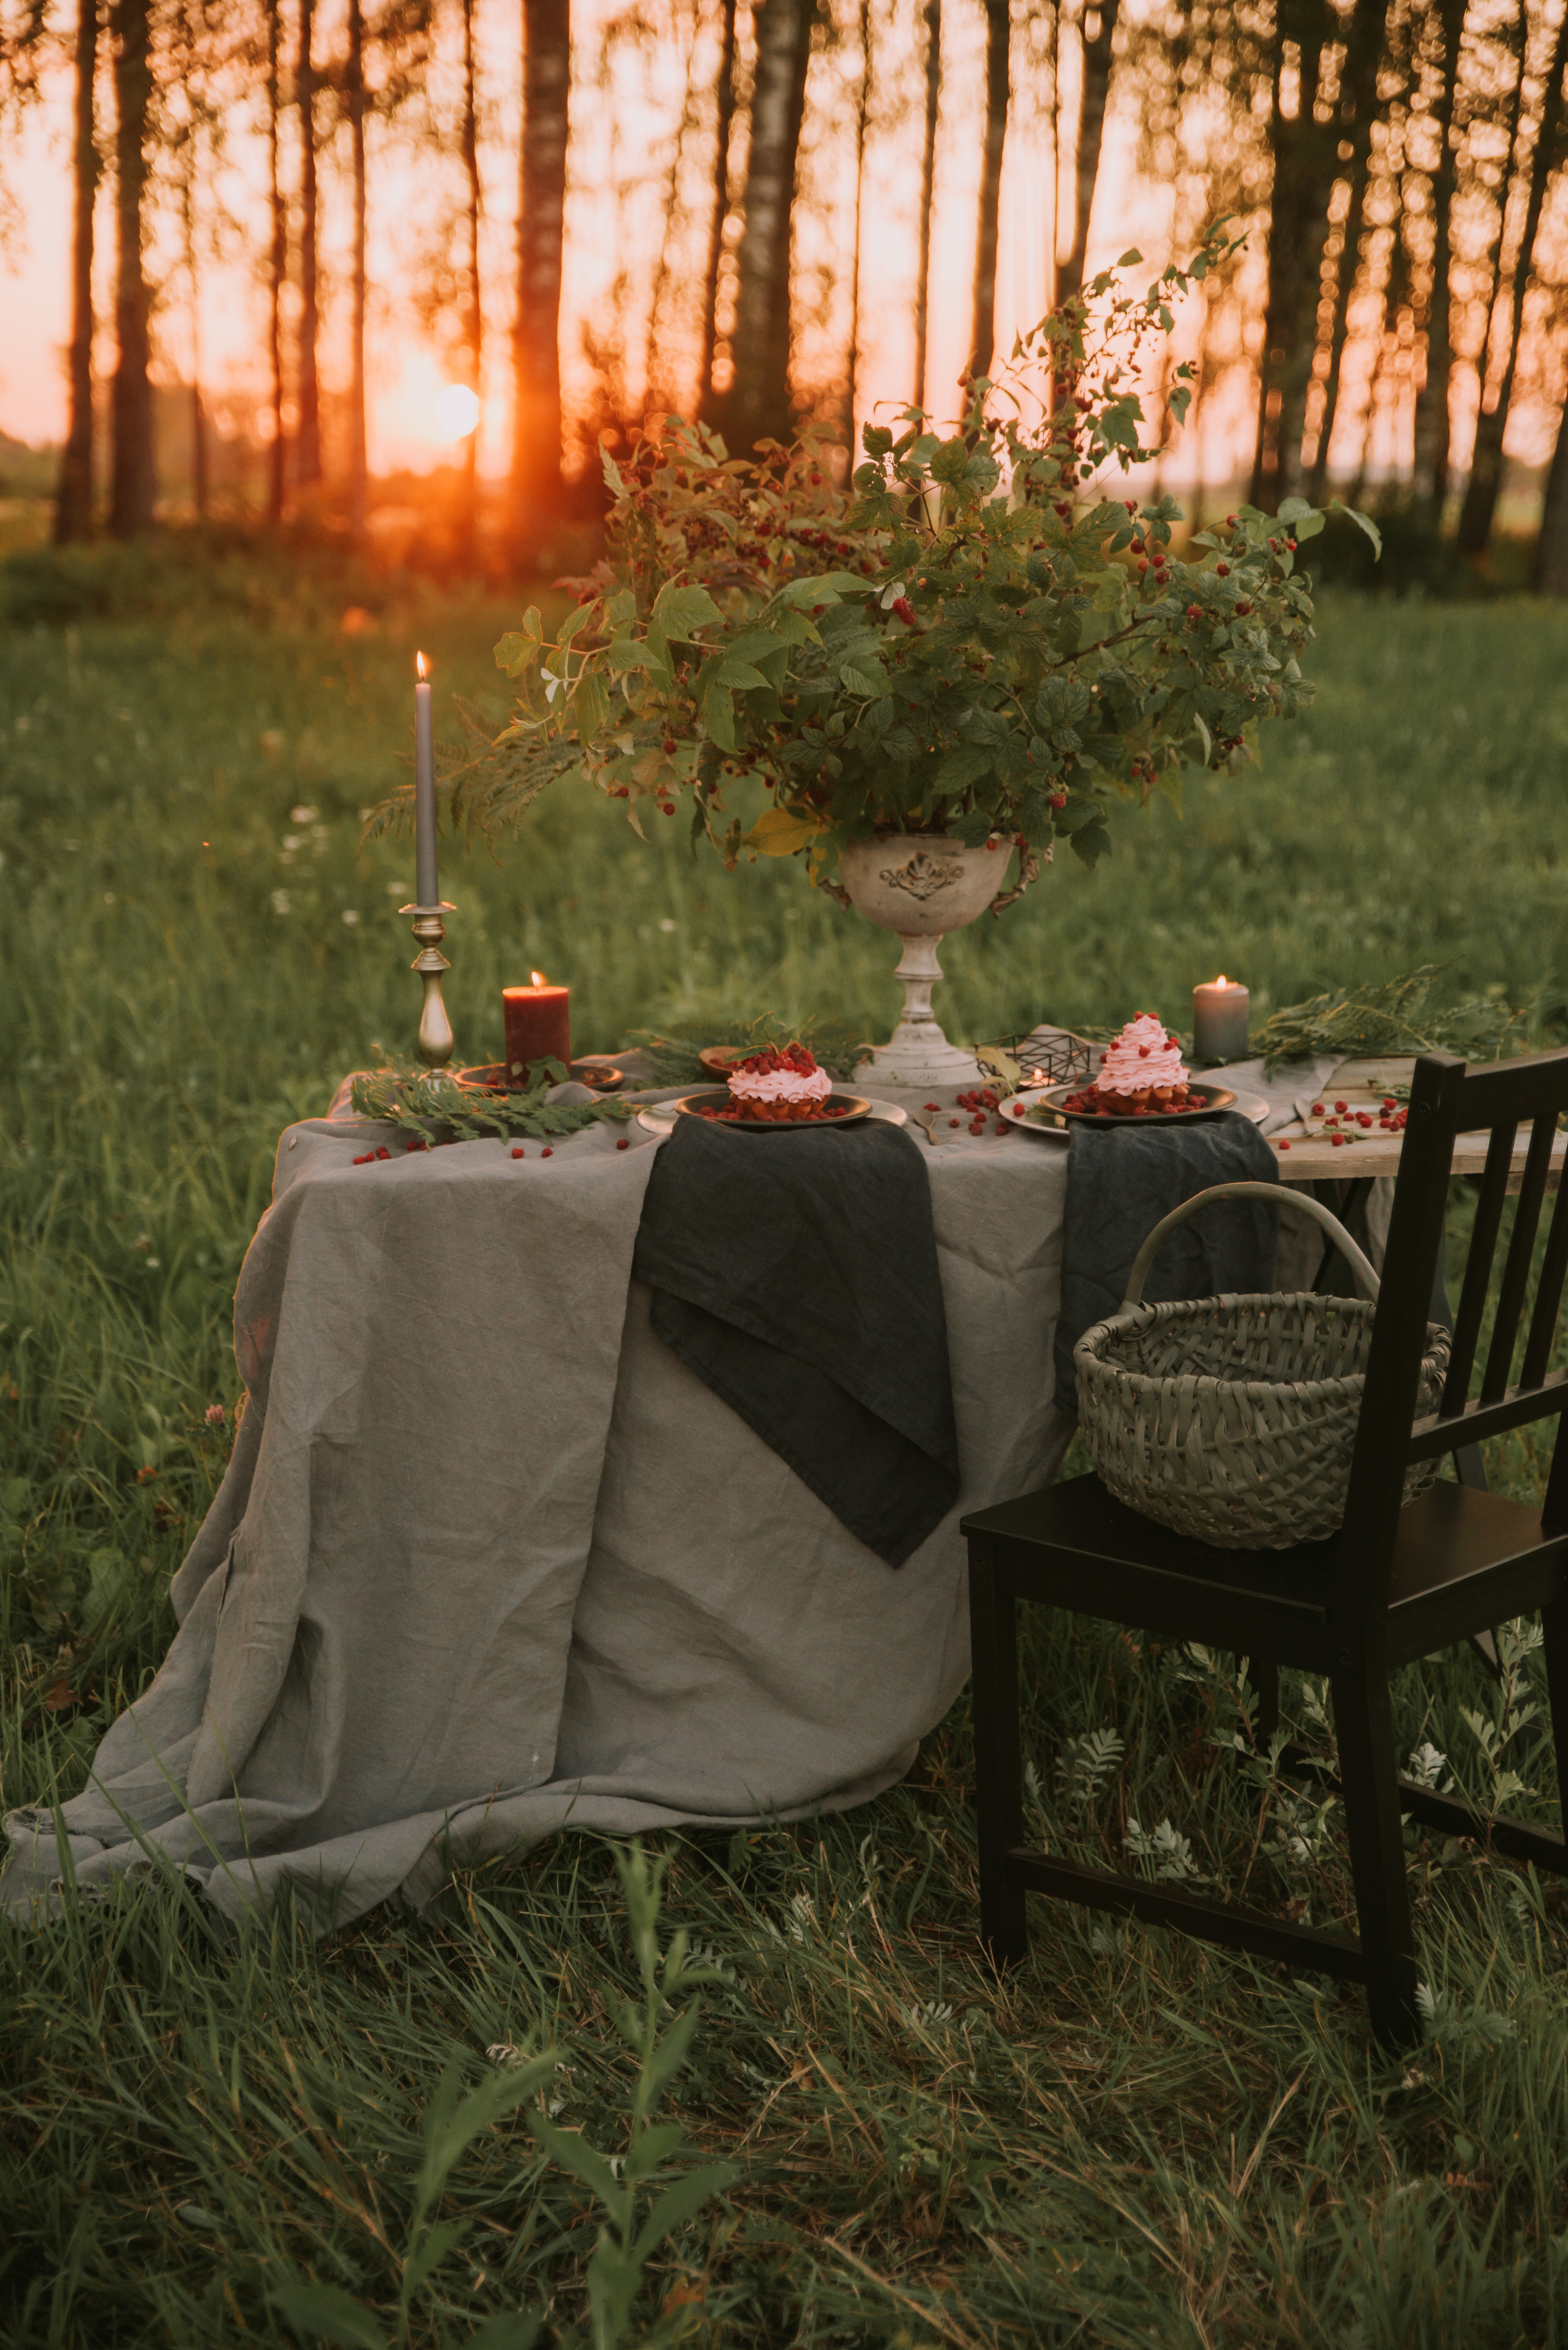 sunset, nature, miscellanea, miscellaneous, chair, table, romance